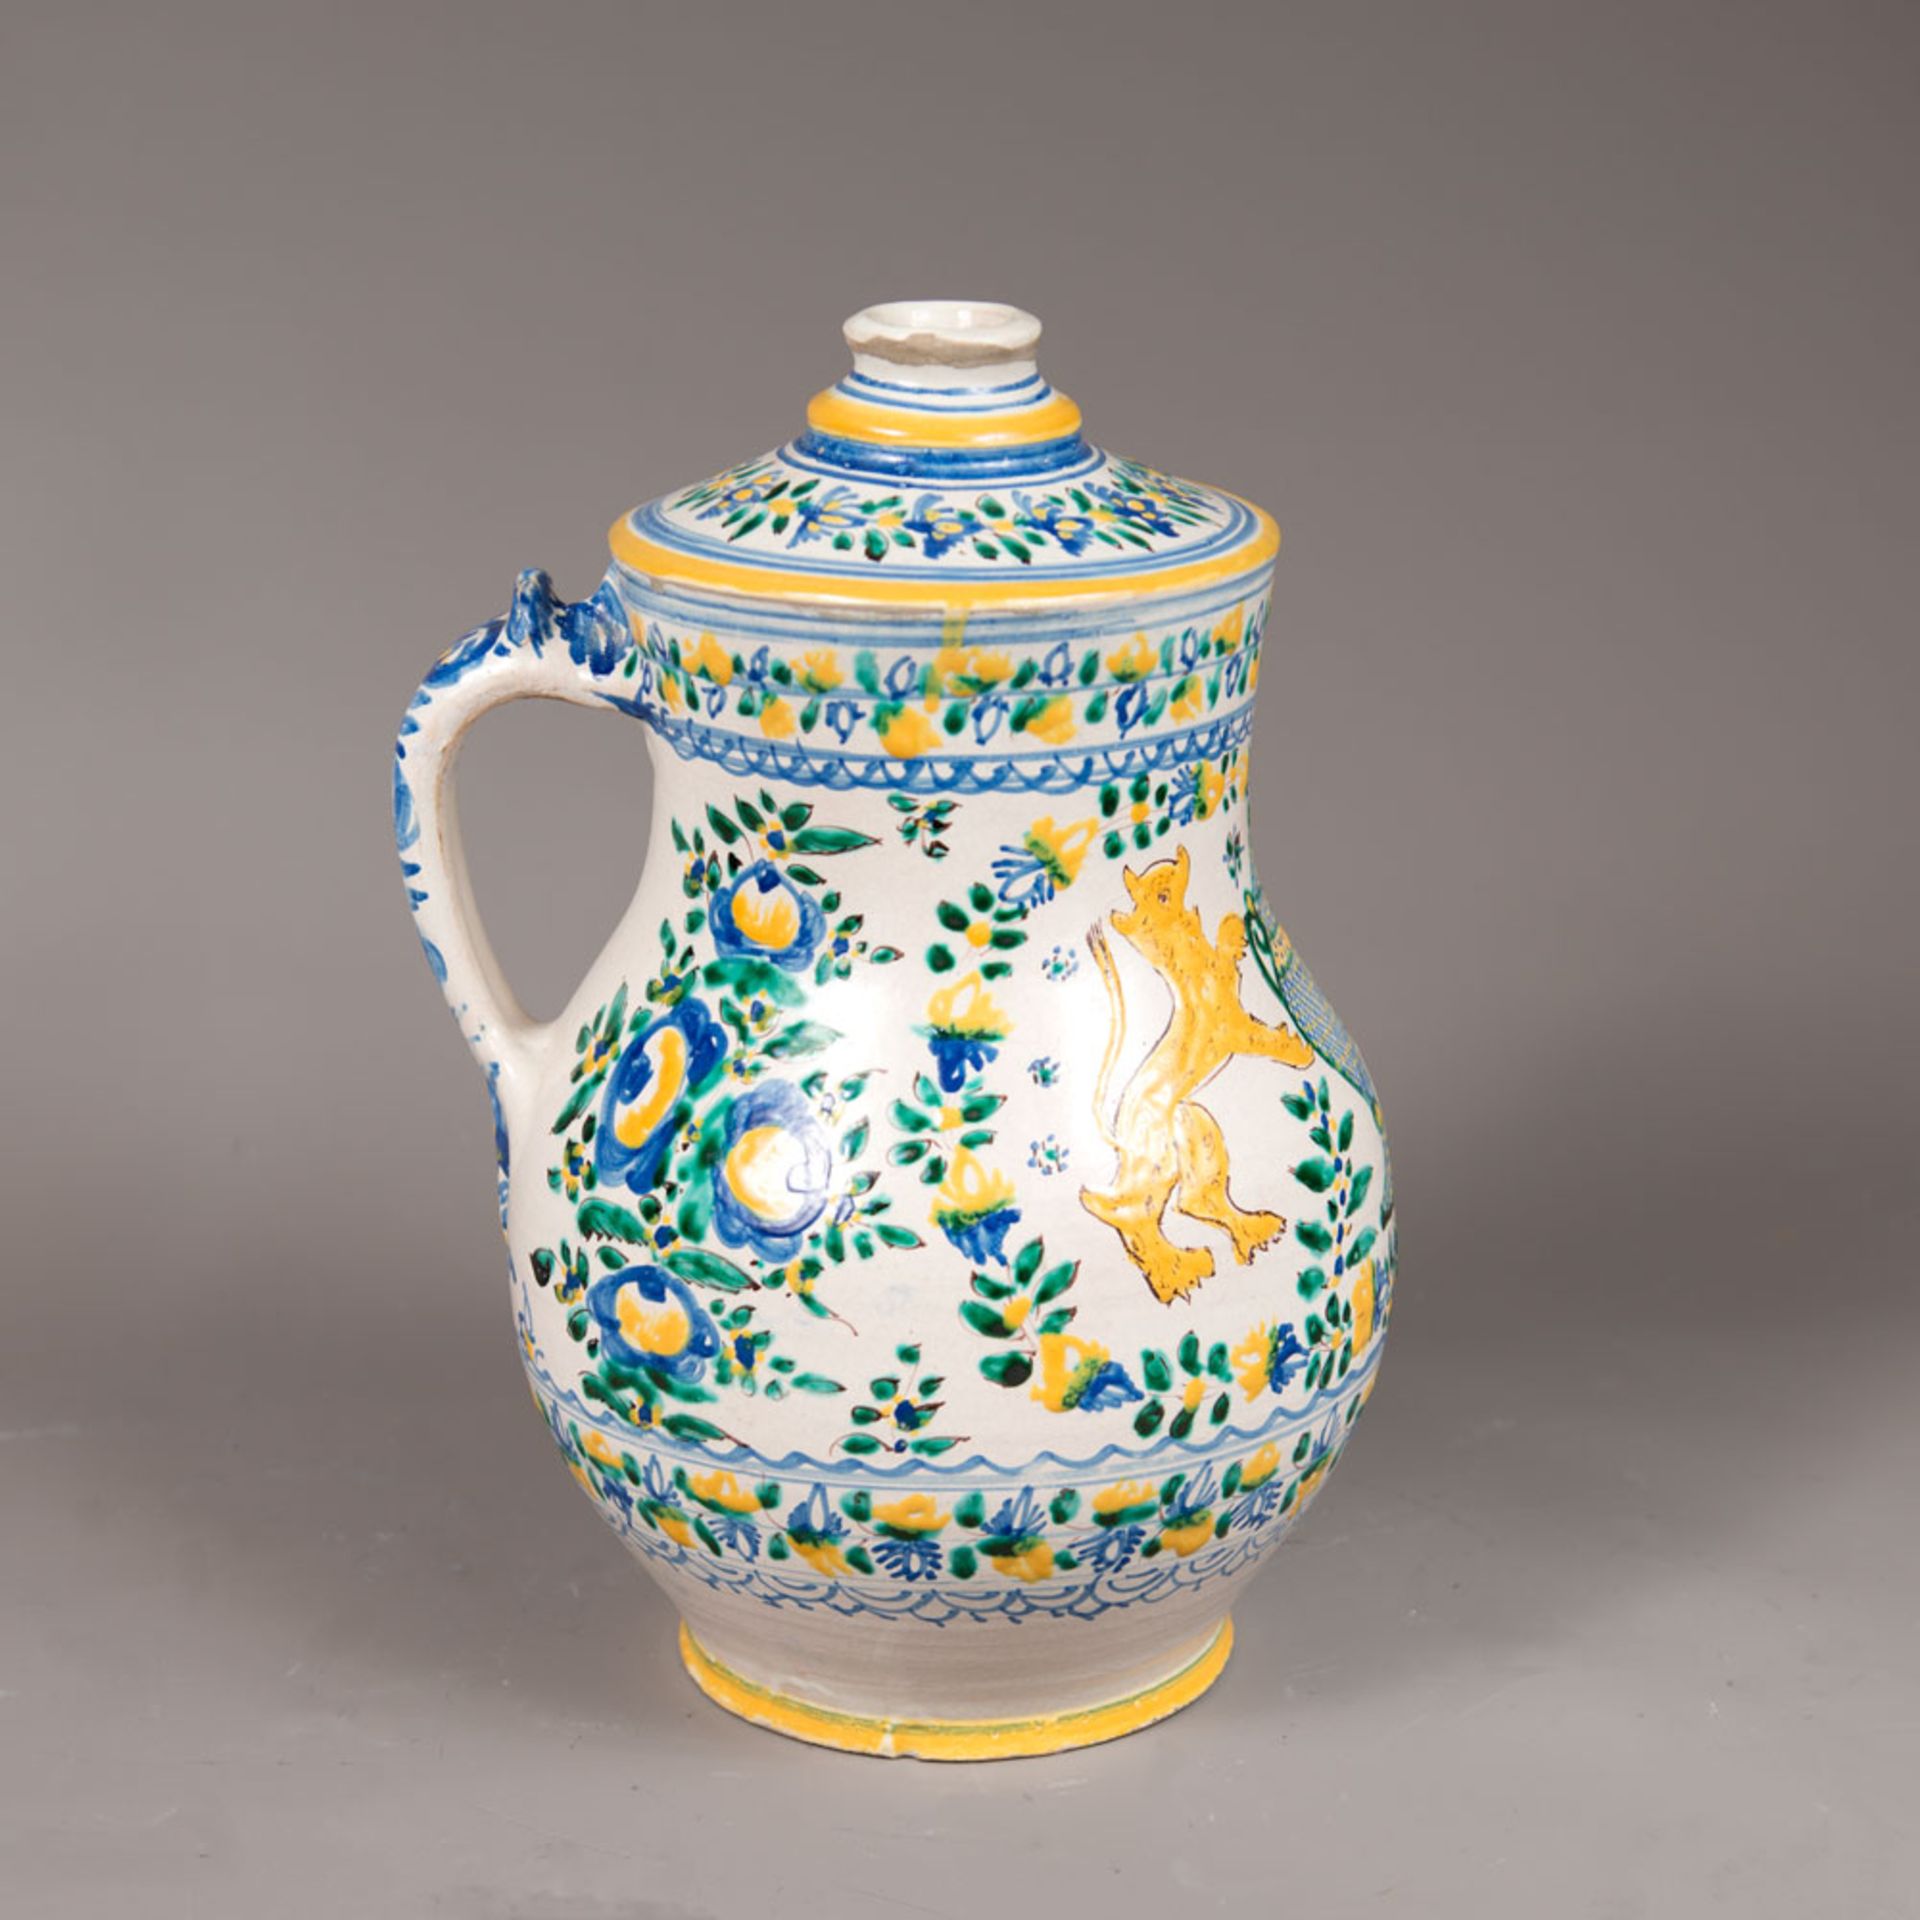 Slovakian ceramic jug - Image 3 of 3